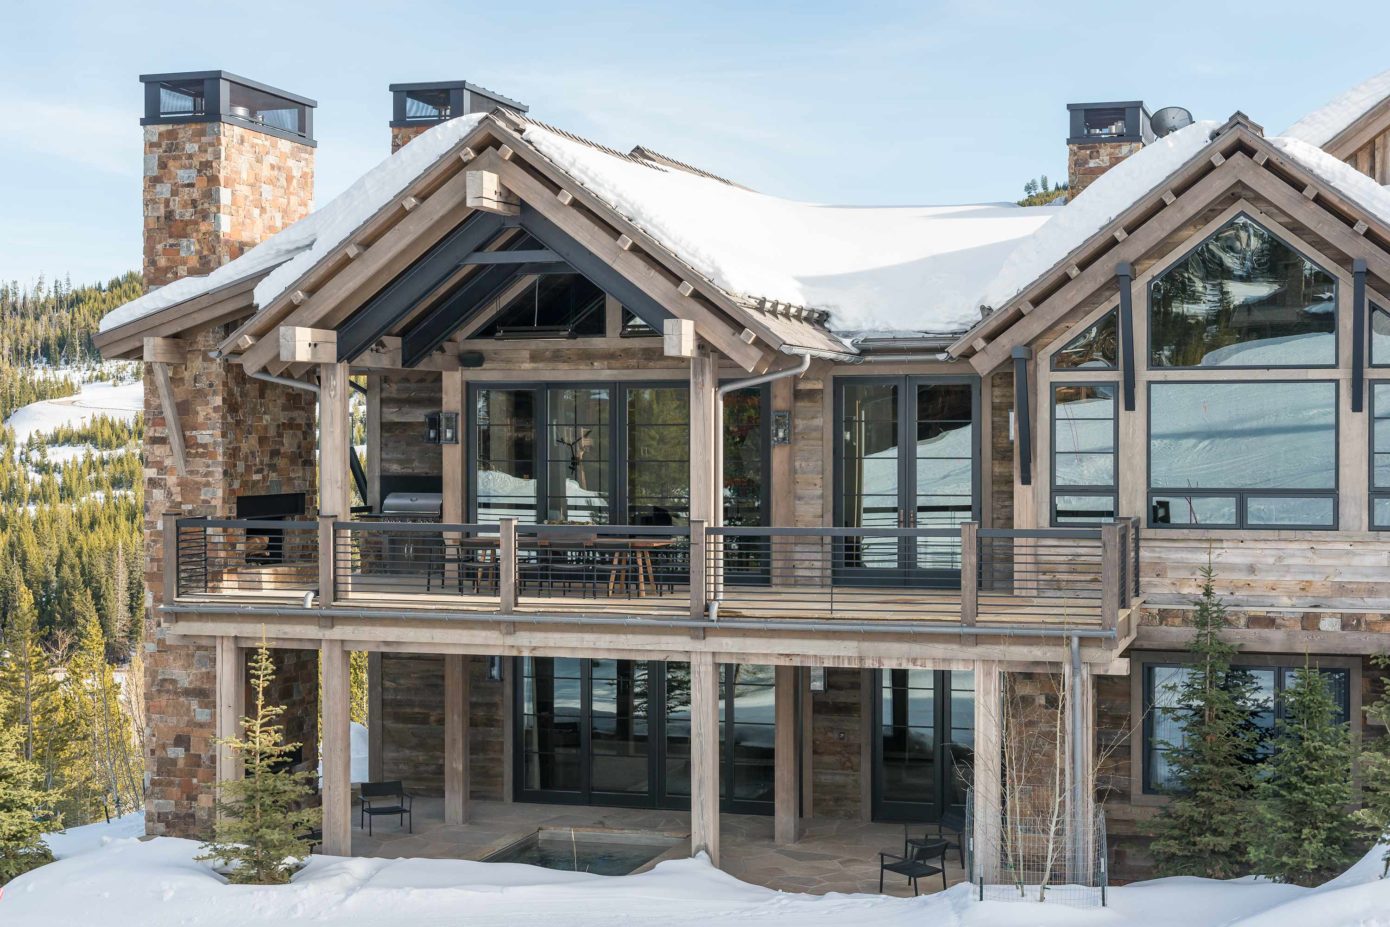 Ski Chalet in Montana by Locati Architects